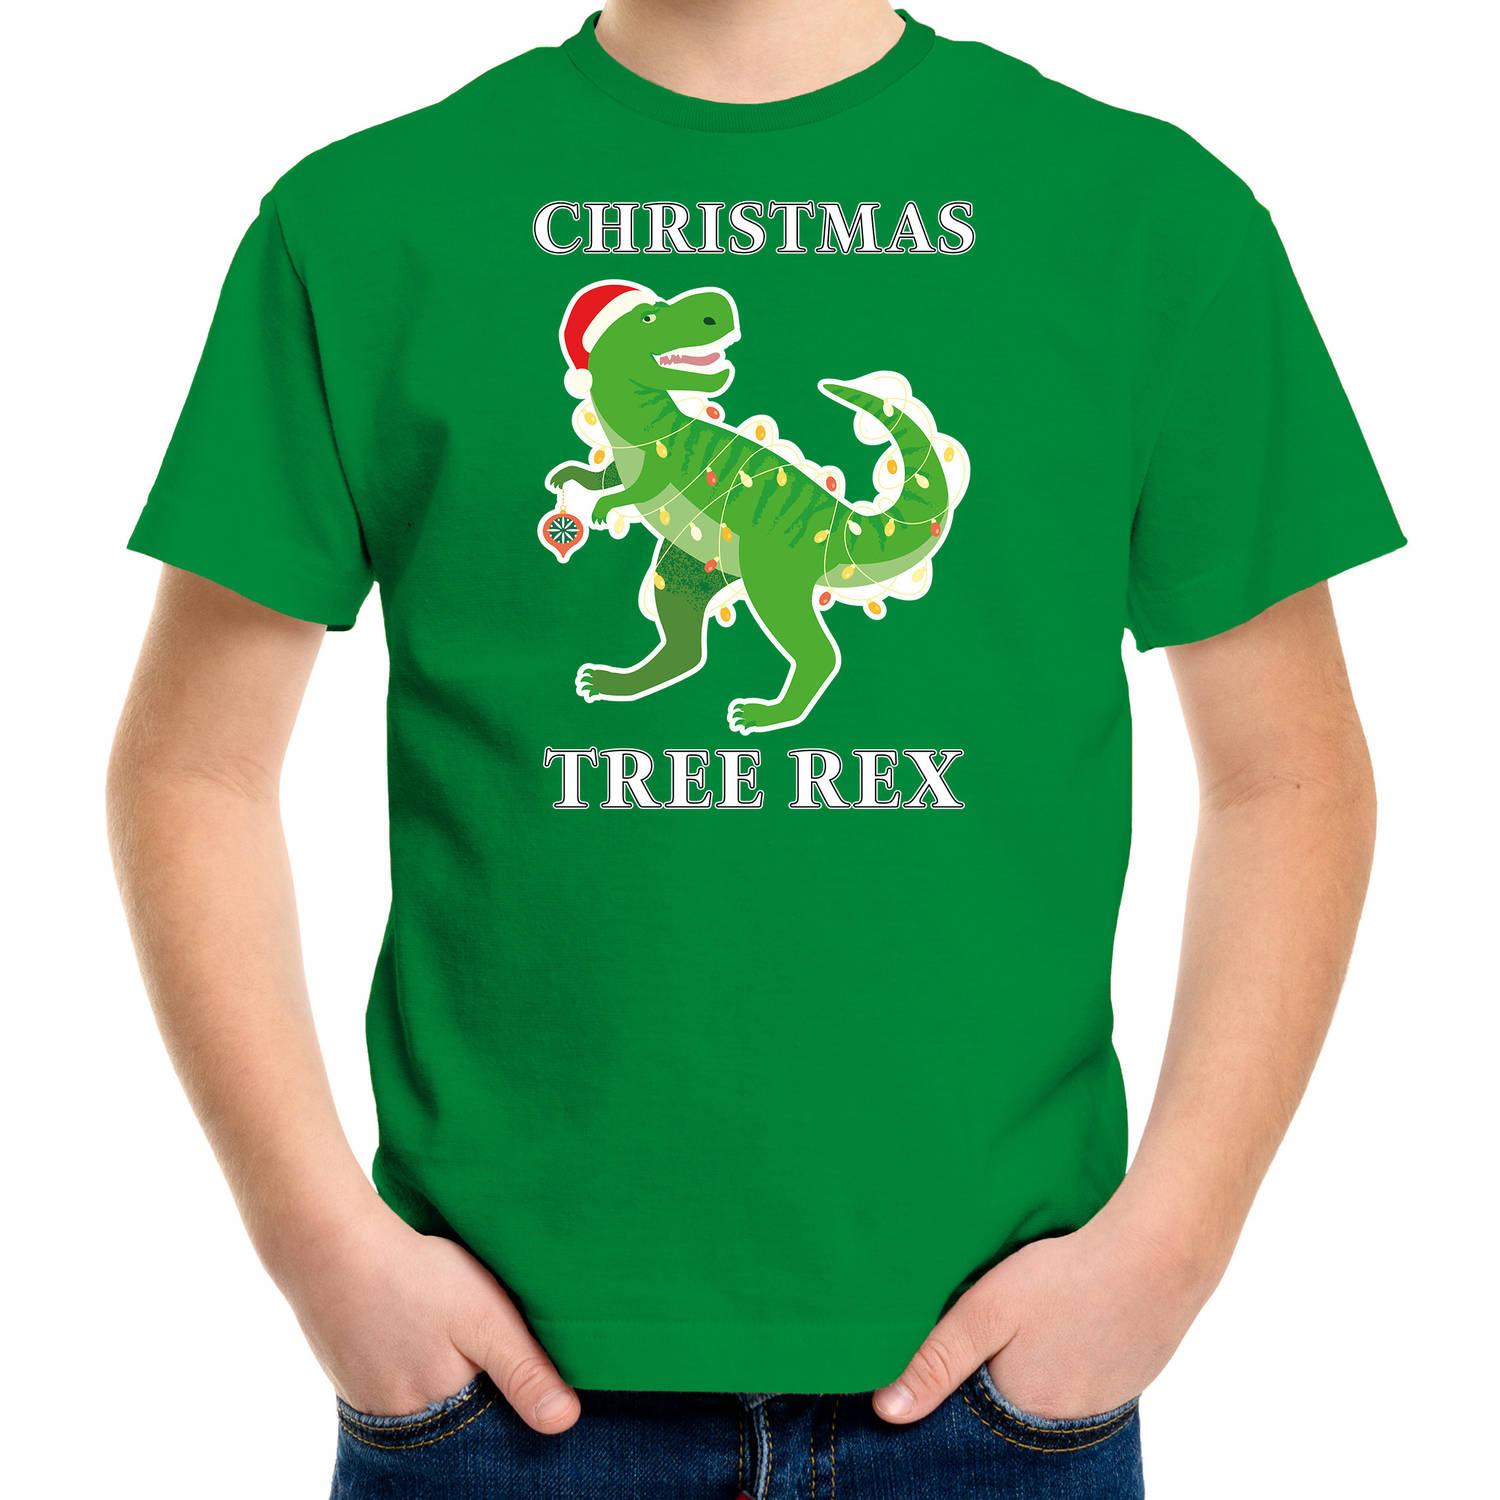 Groen Kerst shirt / Kerstkleding Christmas tree rex voor kinderen L (140-152) - kerst t-shirts kind